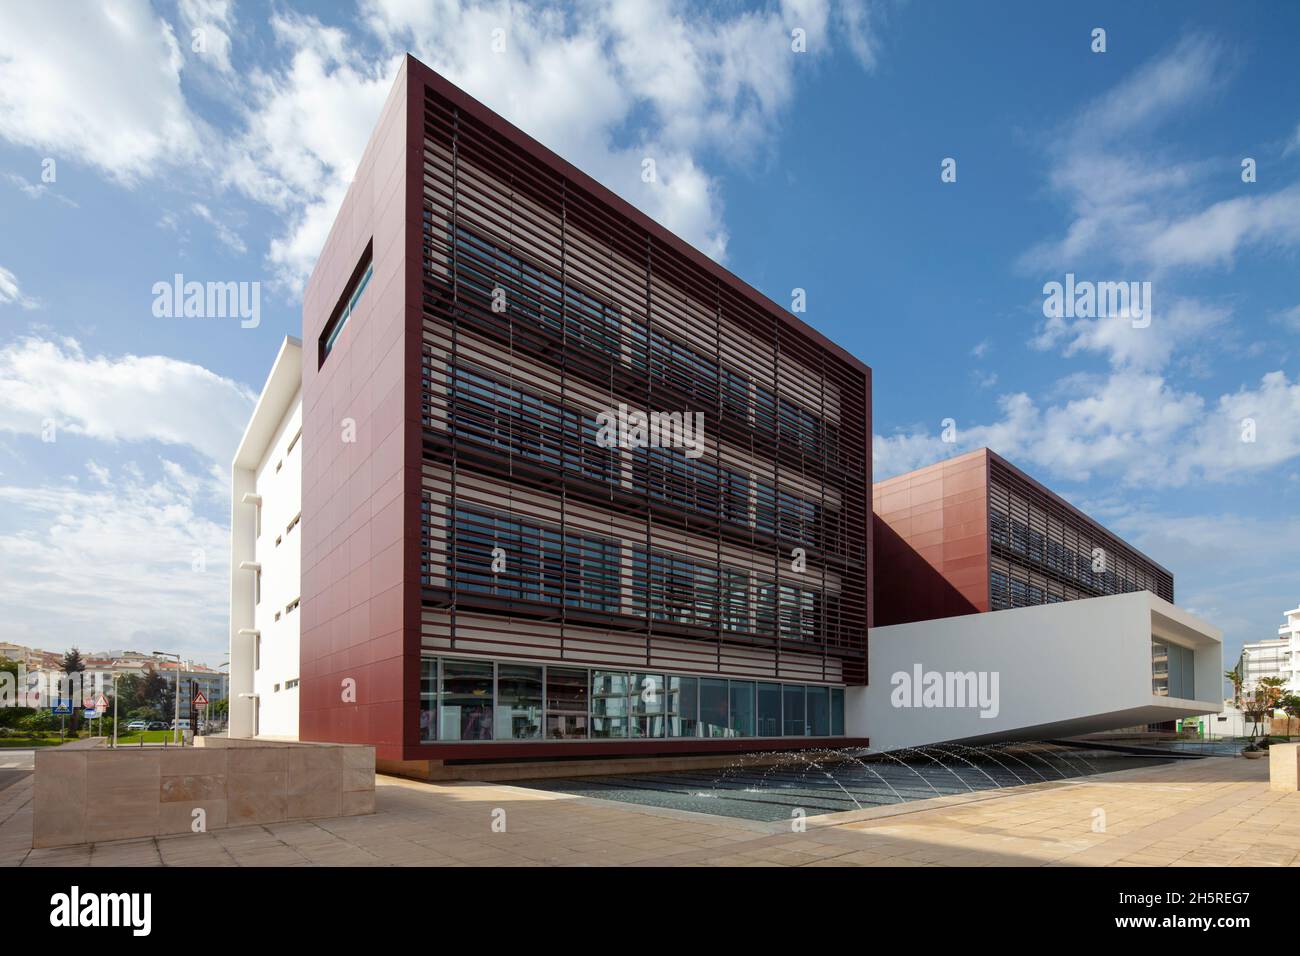 Lagos, Algarve, Portugal - November 18 2020: Câmara Municipal de Lagos Civic Building wurde vor kurzem bei Tageslicht fotografiert. Stockfoto